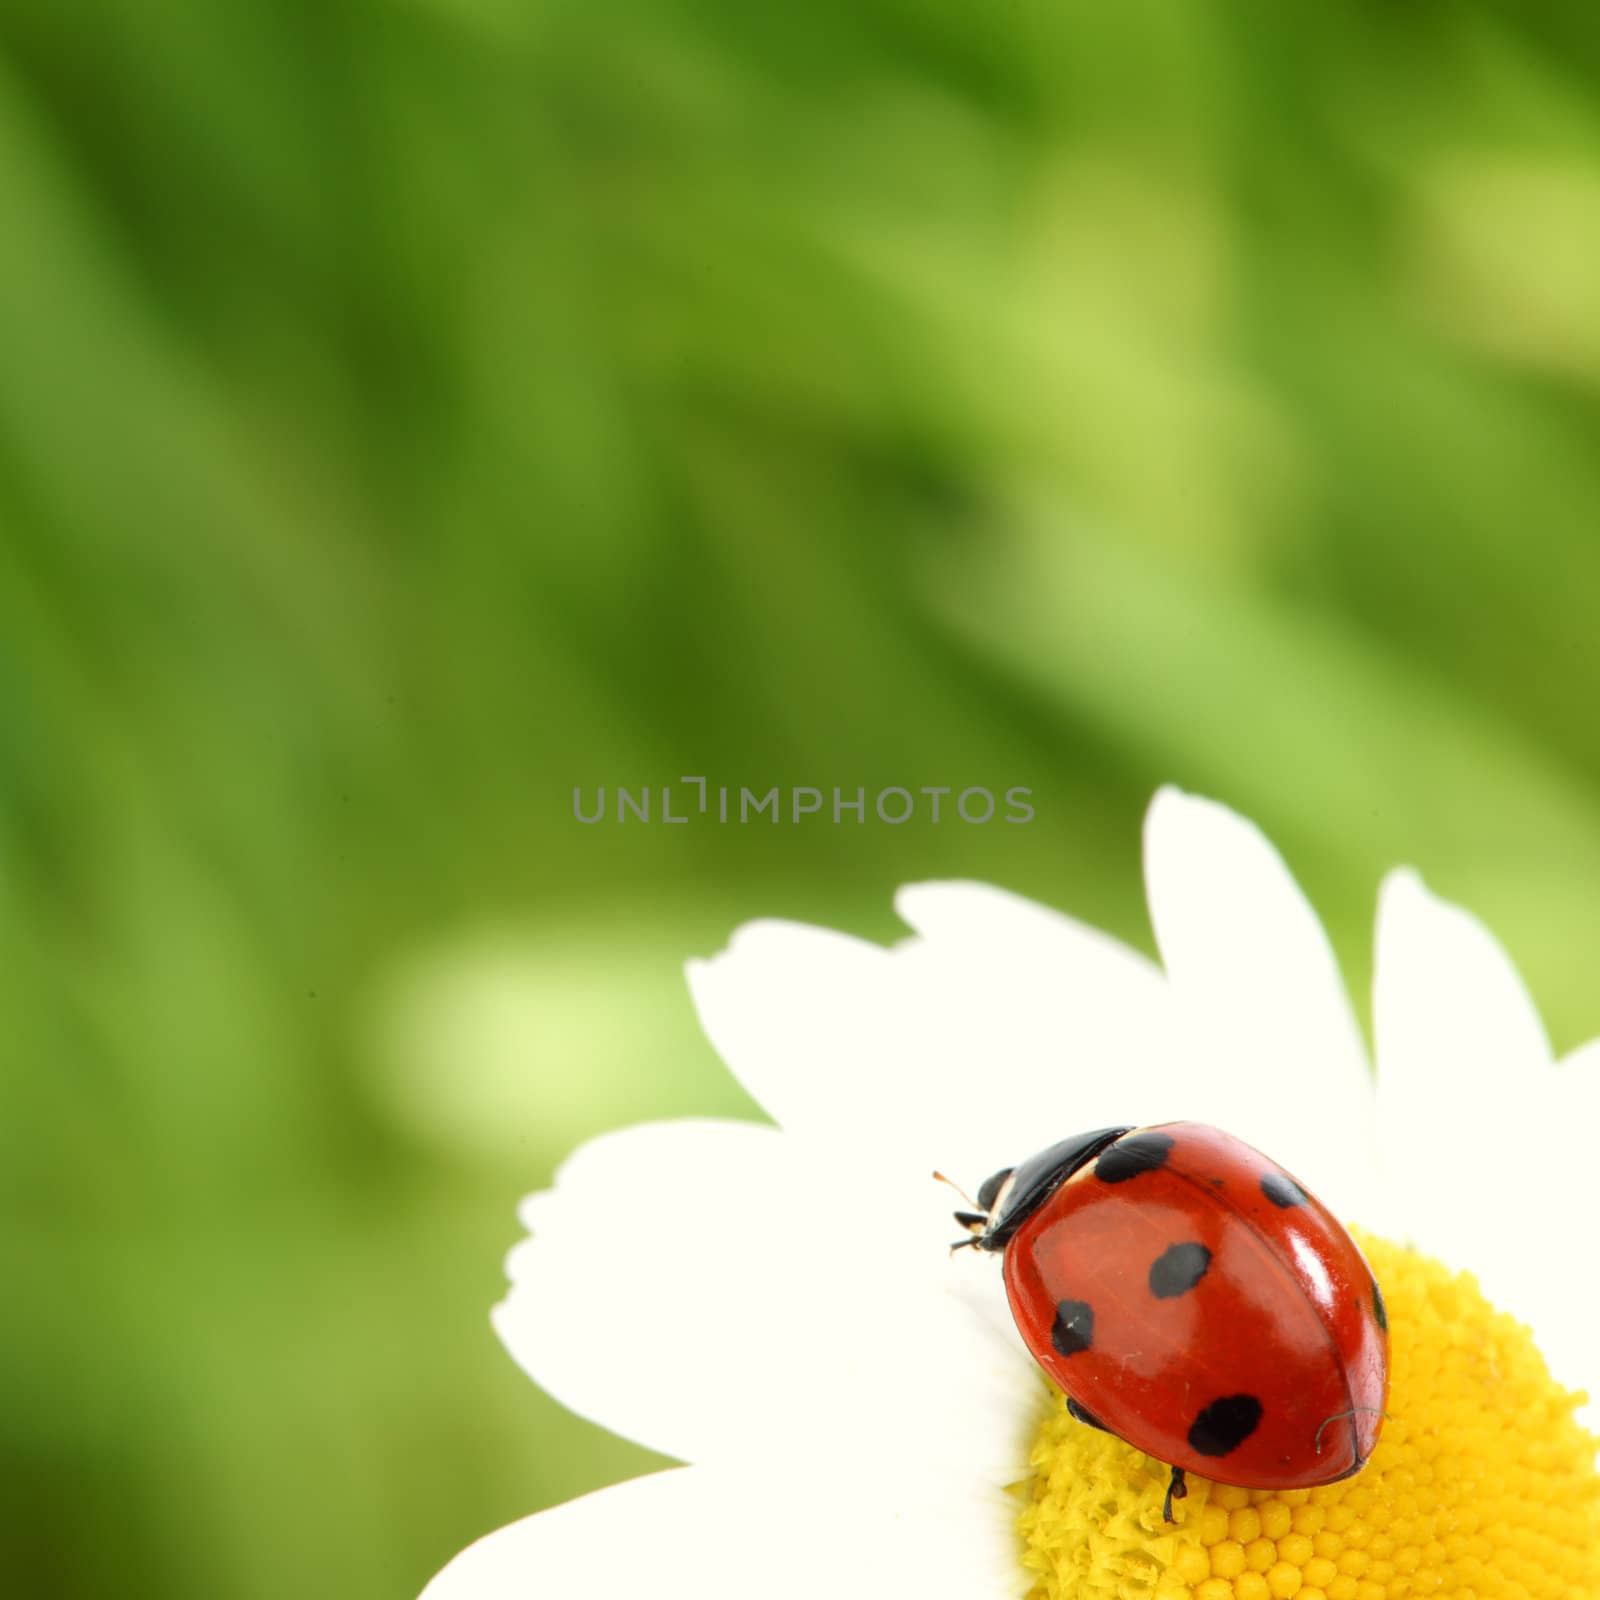 ladybug on camomile green grass background